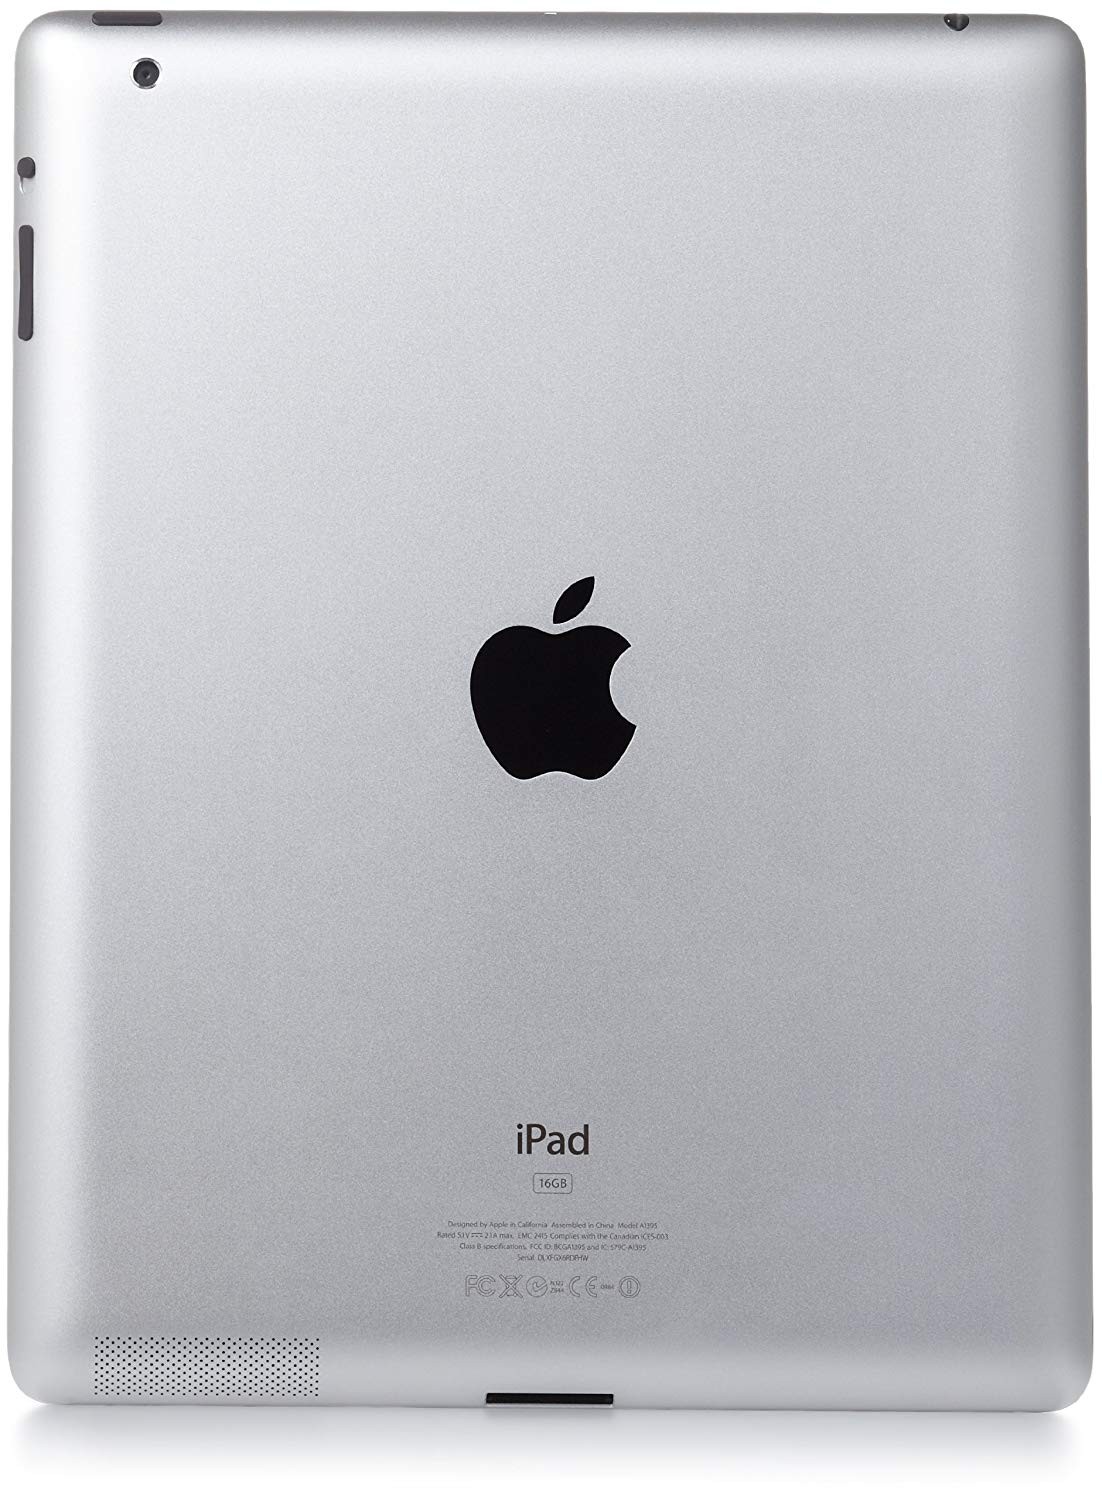 APPLE-IPAD2-A1397-64GB-DUAL-CORE-Apple iPad 2 Gen (A1397) Refurbished Tablet 64 GB HDD 512 MB RAM 9.7-inch Dual-Core Pre-installed Win 7 OS-image